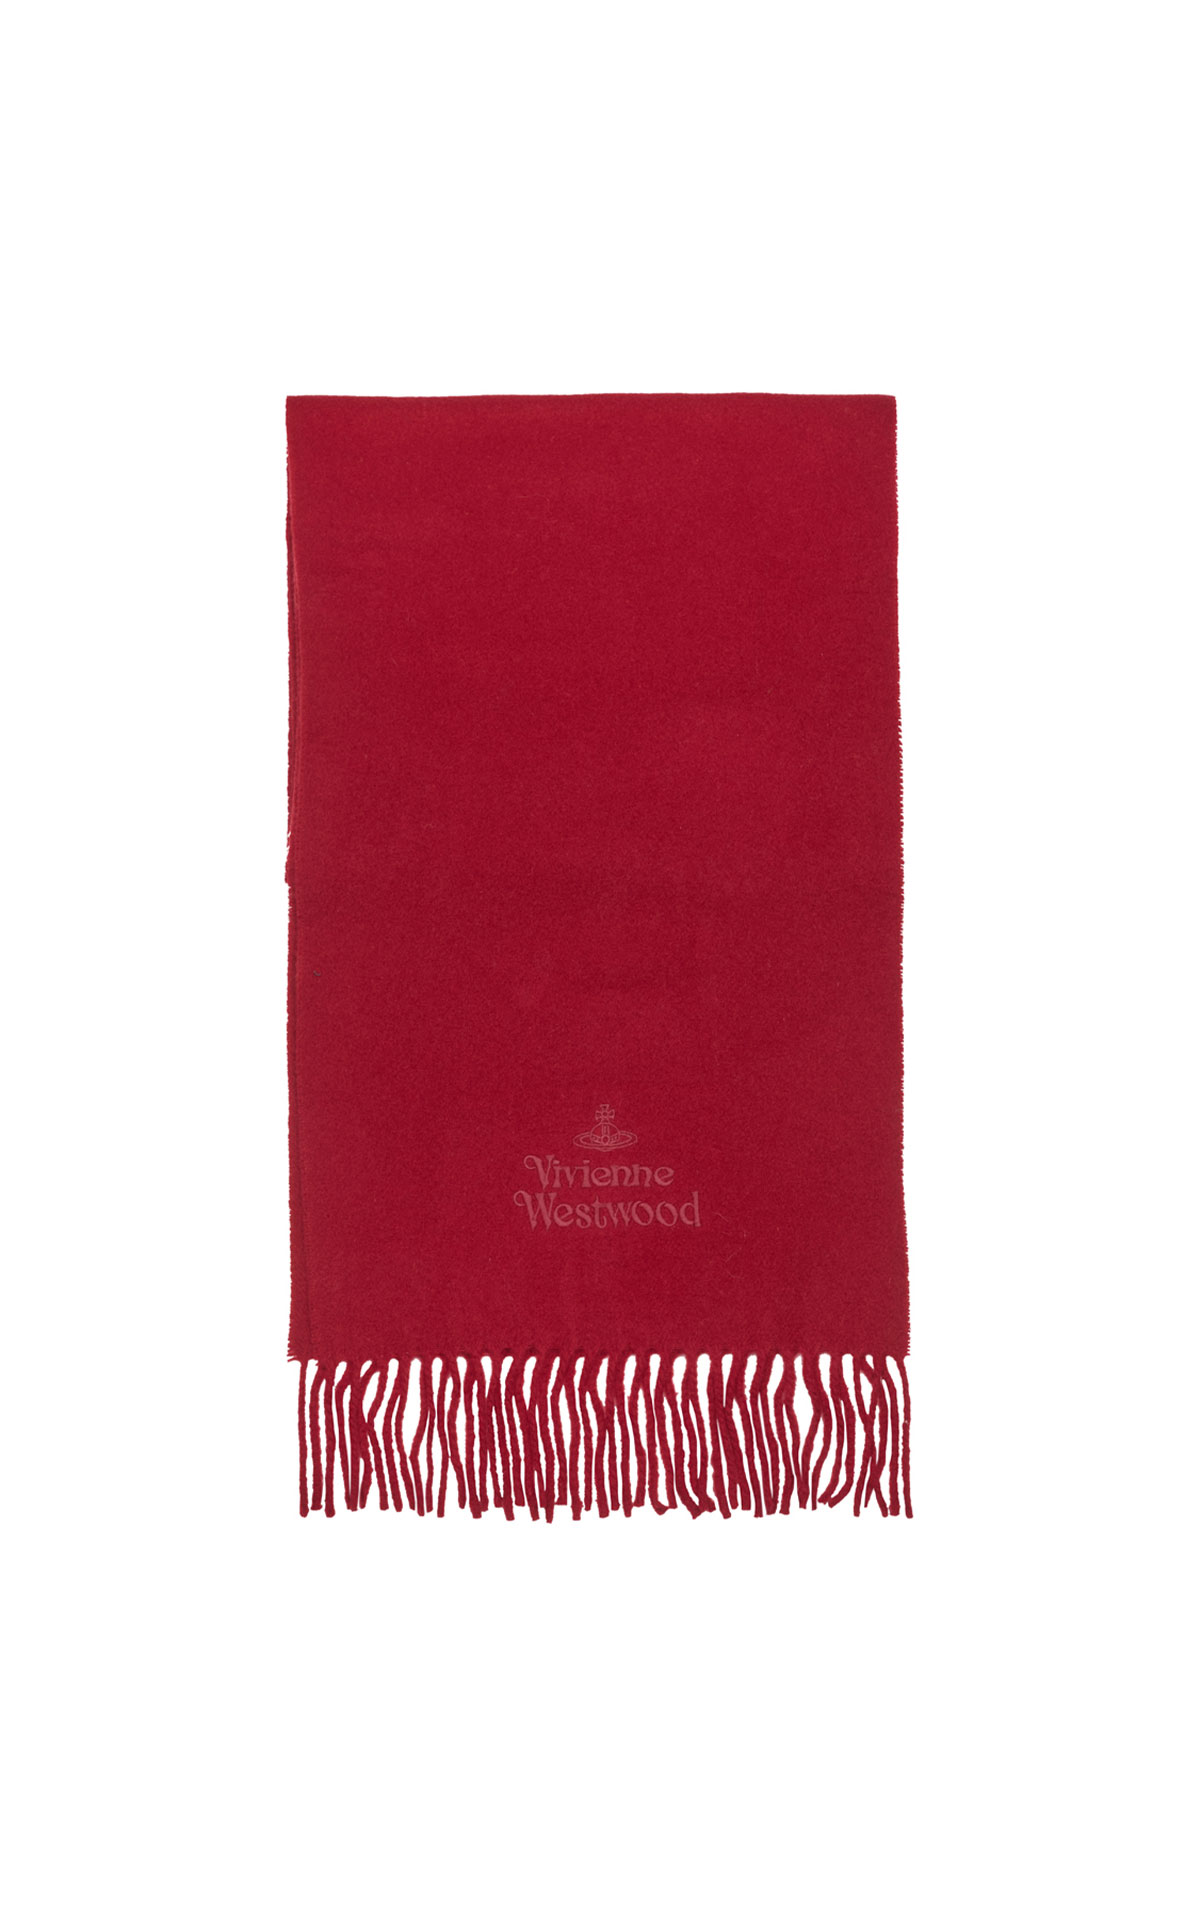 Vivienne Westwood Red scarf from Bicester Village